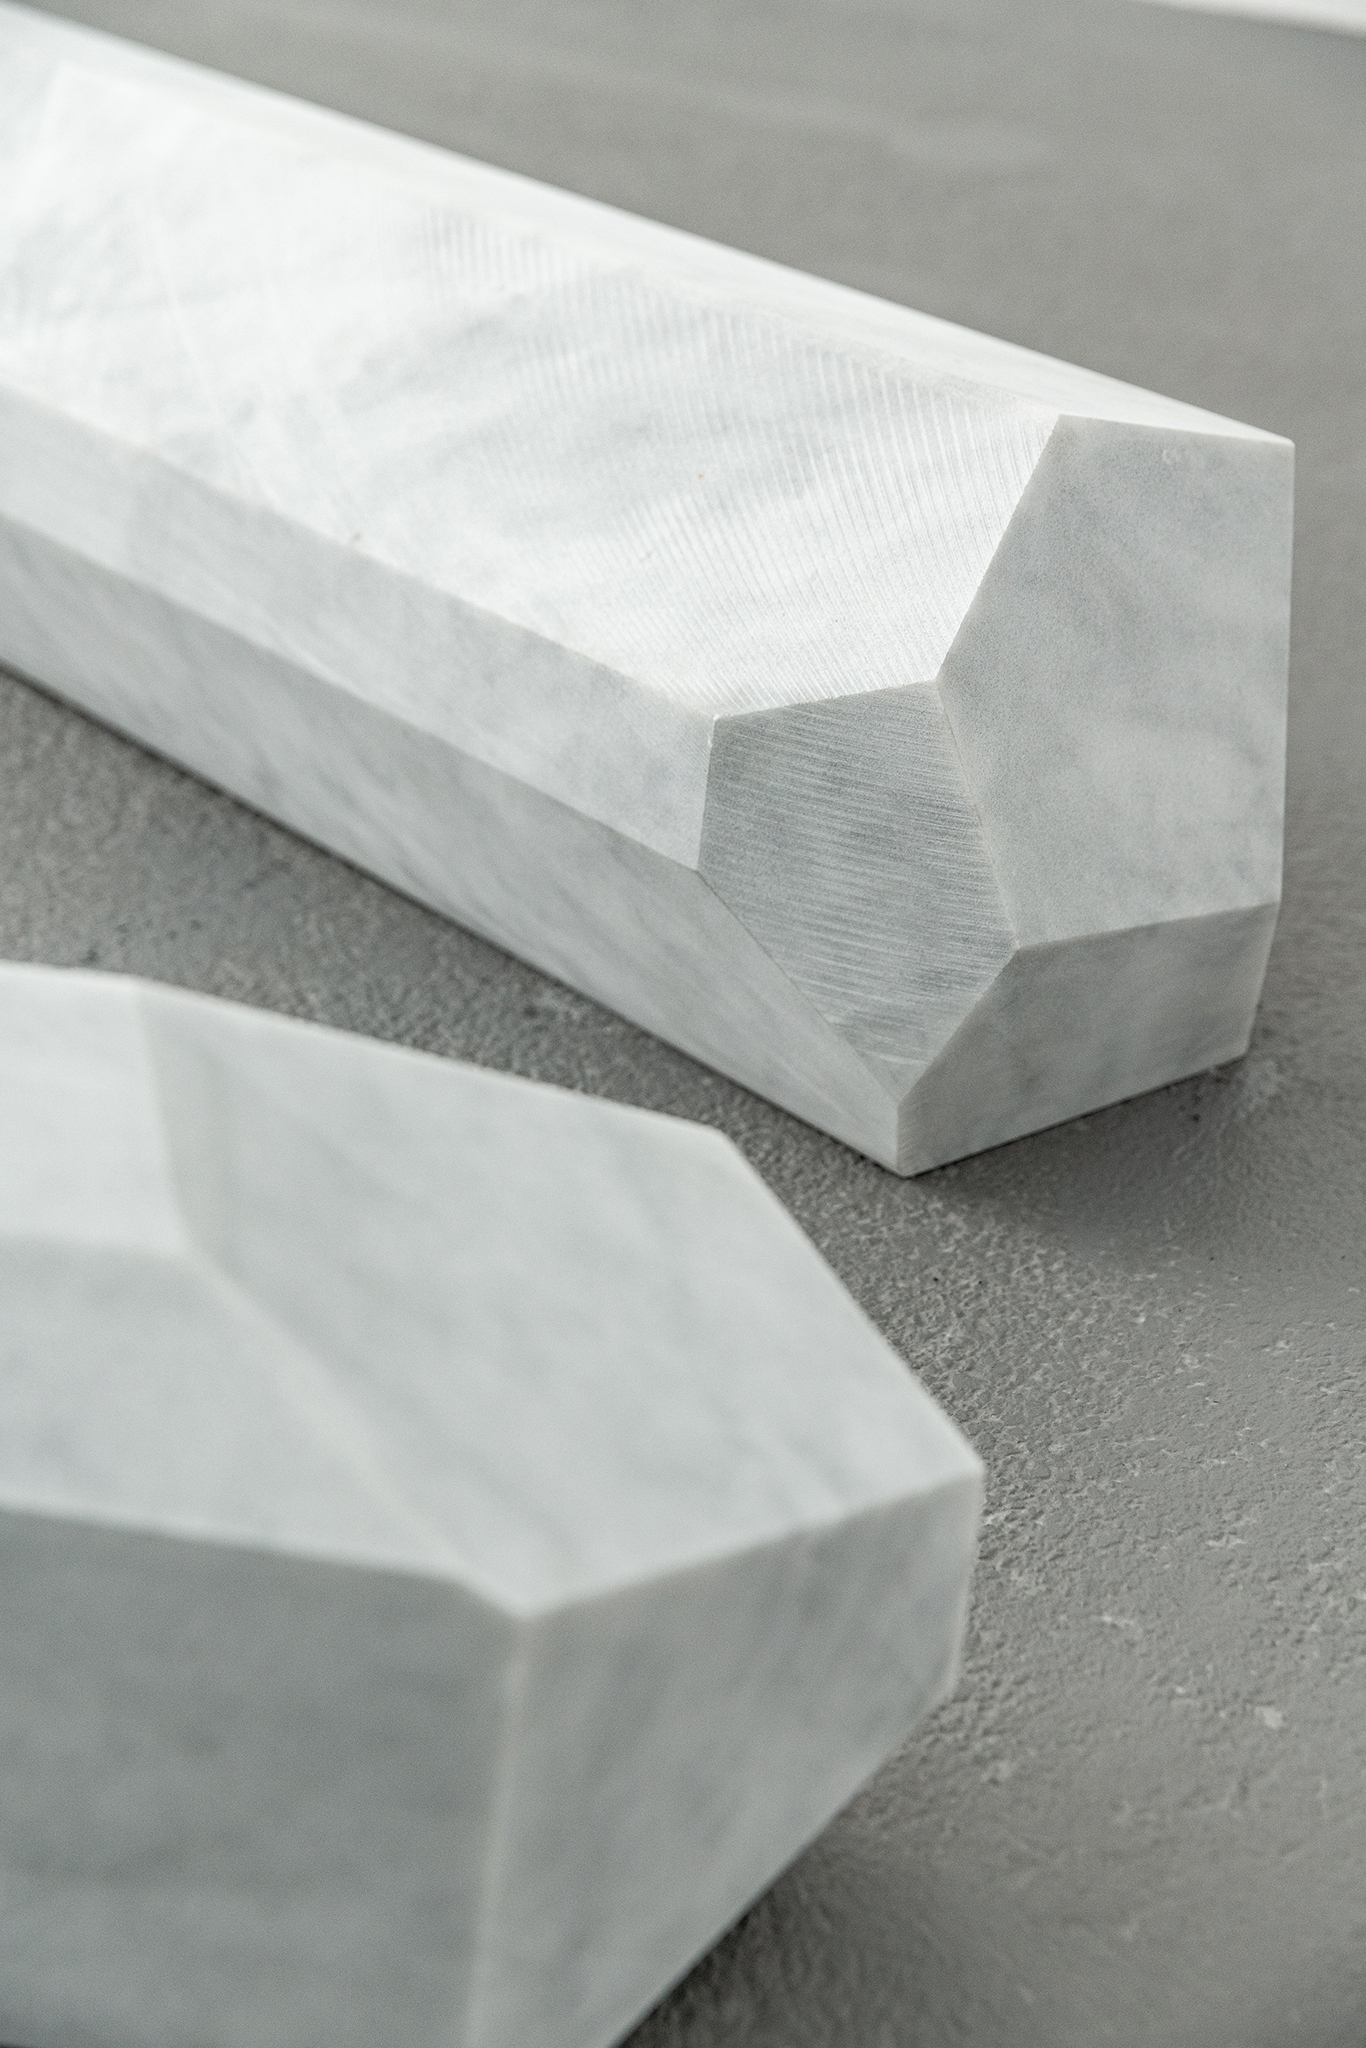 Lou Jaworski JET 001, 2022, Carrara white marble 3 parts, Ã˜25x203, Ã˜17x168, Ã˜20x82, Courtesy of max goelitz, Copyright of the artist, Photo: Dirk Tacke